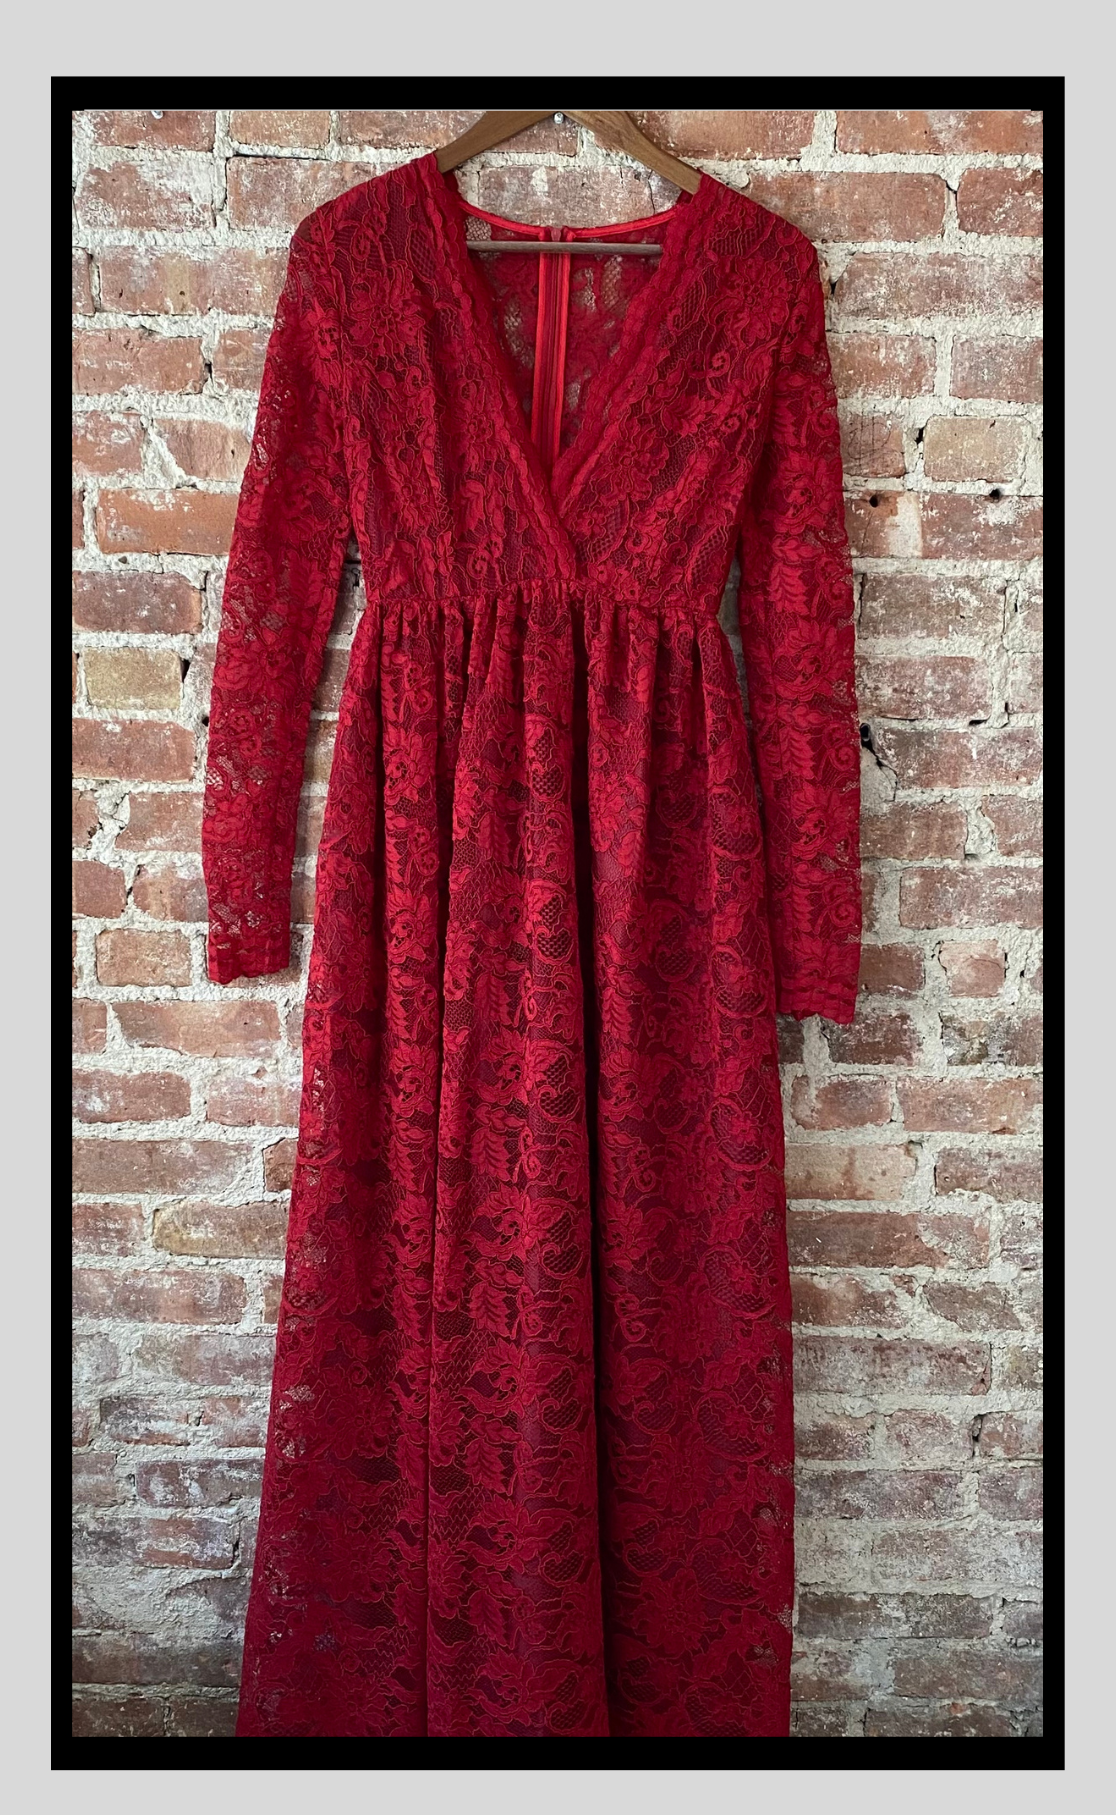 Burgundy Lace Dress